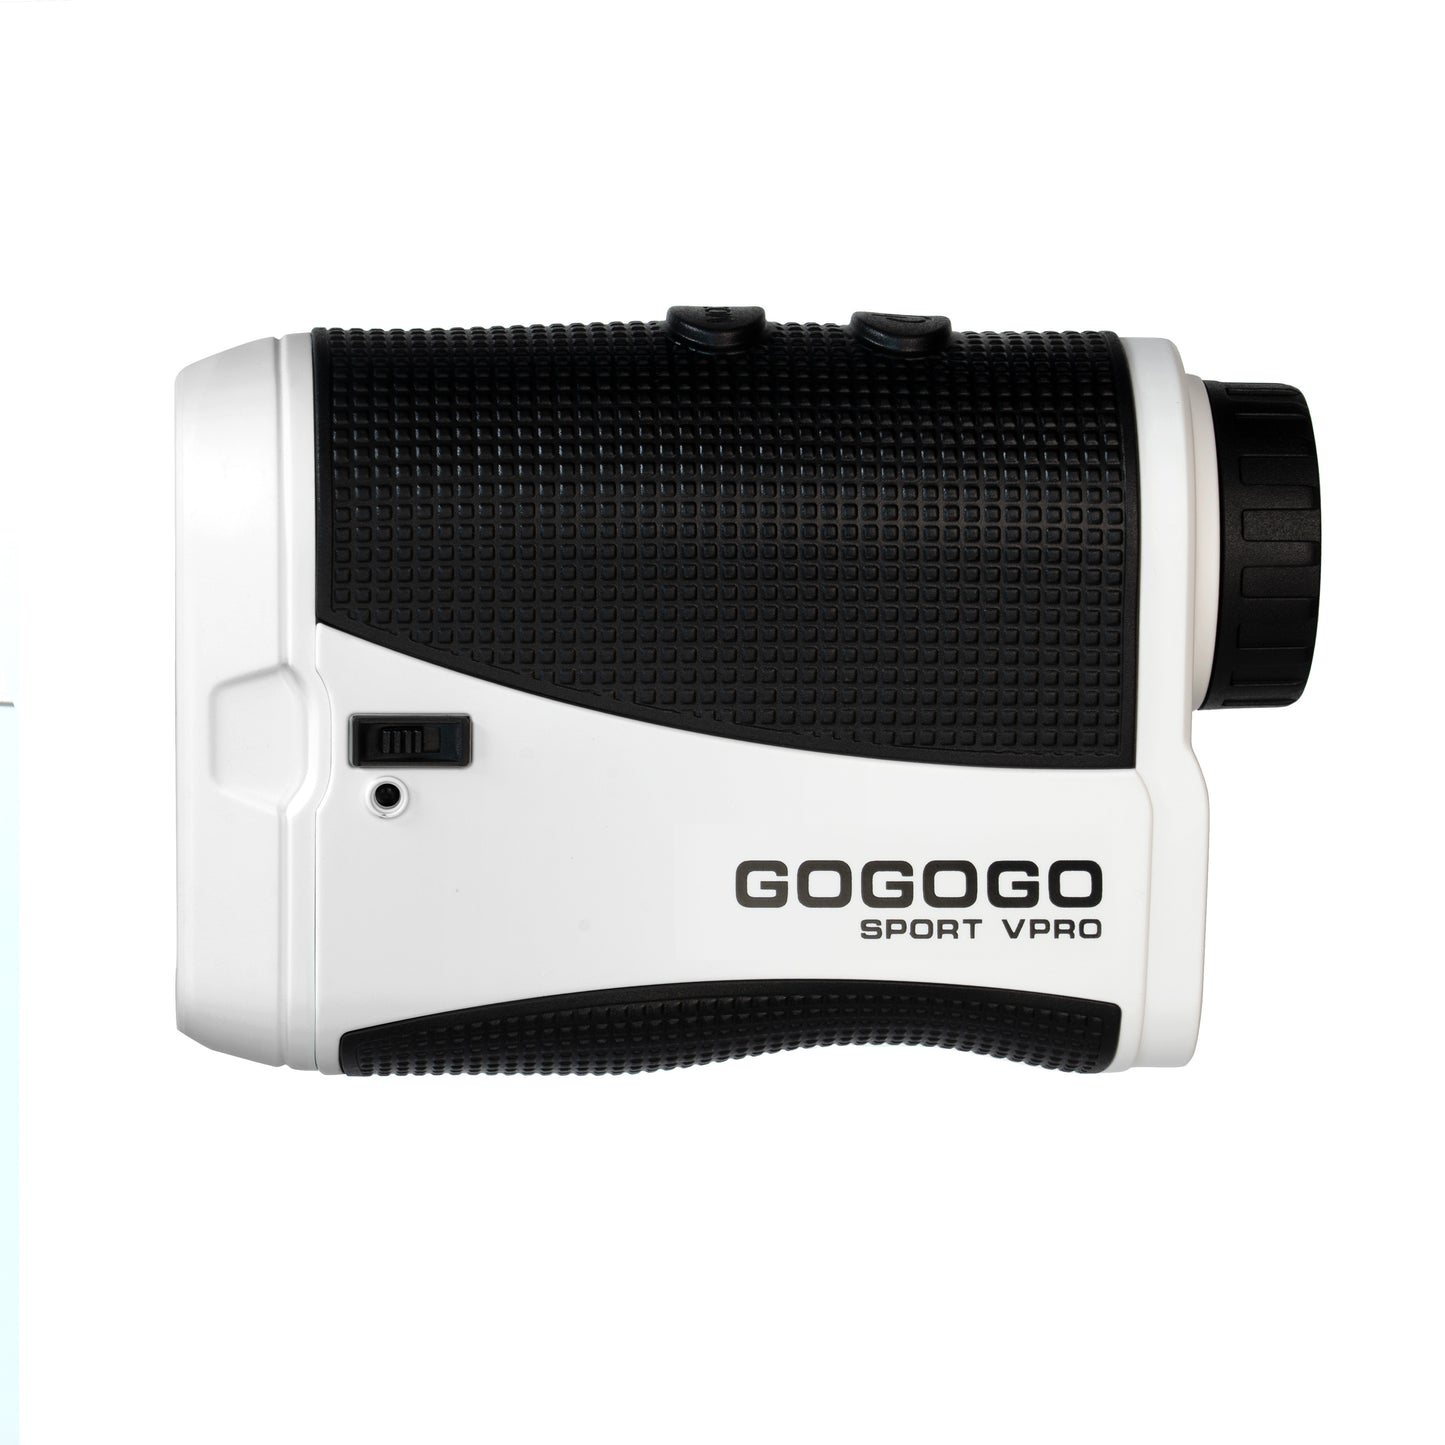 Golf Rangefinder|Red Display with Slope Switch|Laser Hunting Rangefinder|6X Magnification|Gogogo GS34 Black 800/1200Y